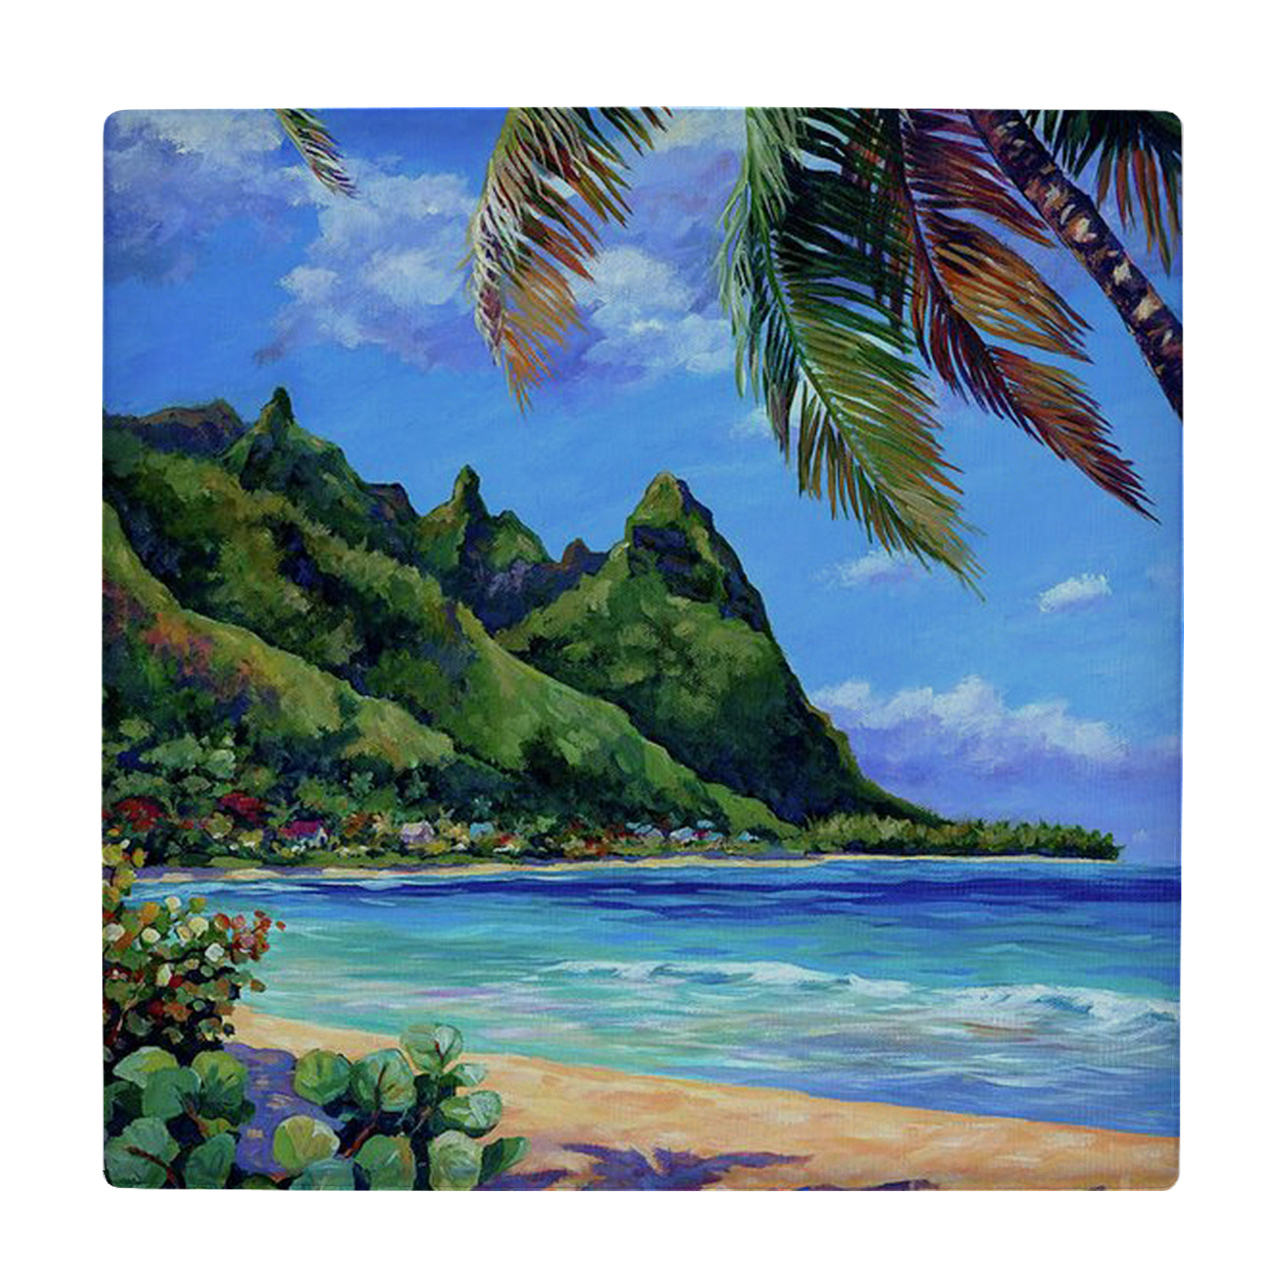  کاشی کارنیلا نقاشی ساحل استوایی مدل لوحی کد klh2397 